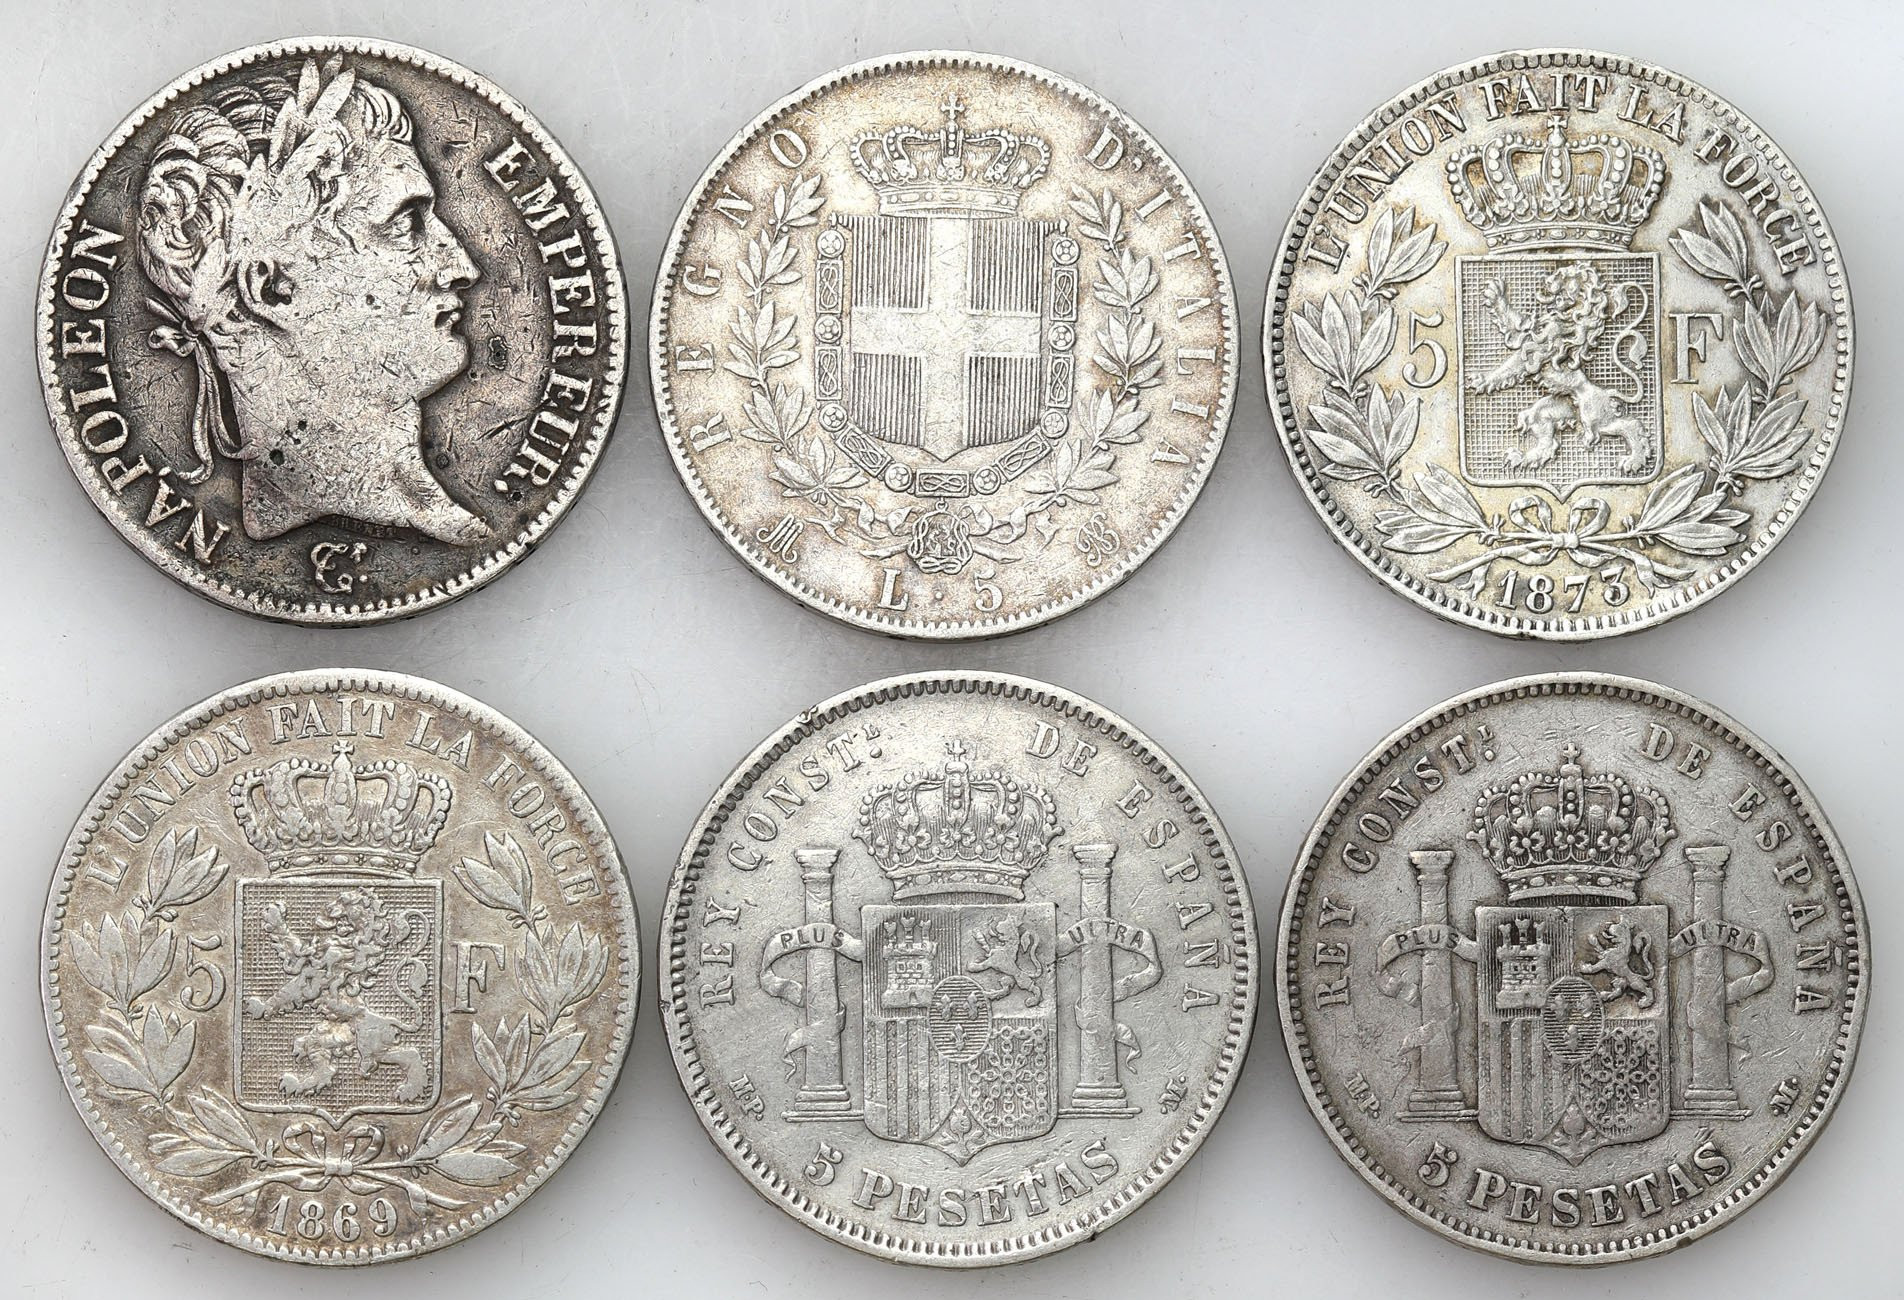 Francja, Hiszpania. 5 pesetas 1888, 1889, 5 franków 1809, 1869, 1873, 1874, zestaw 6 monet